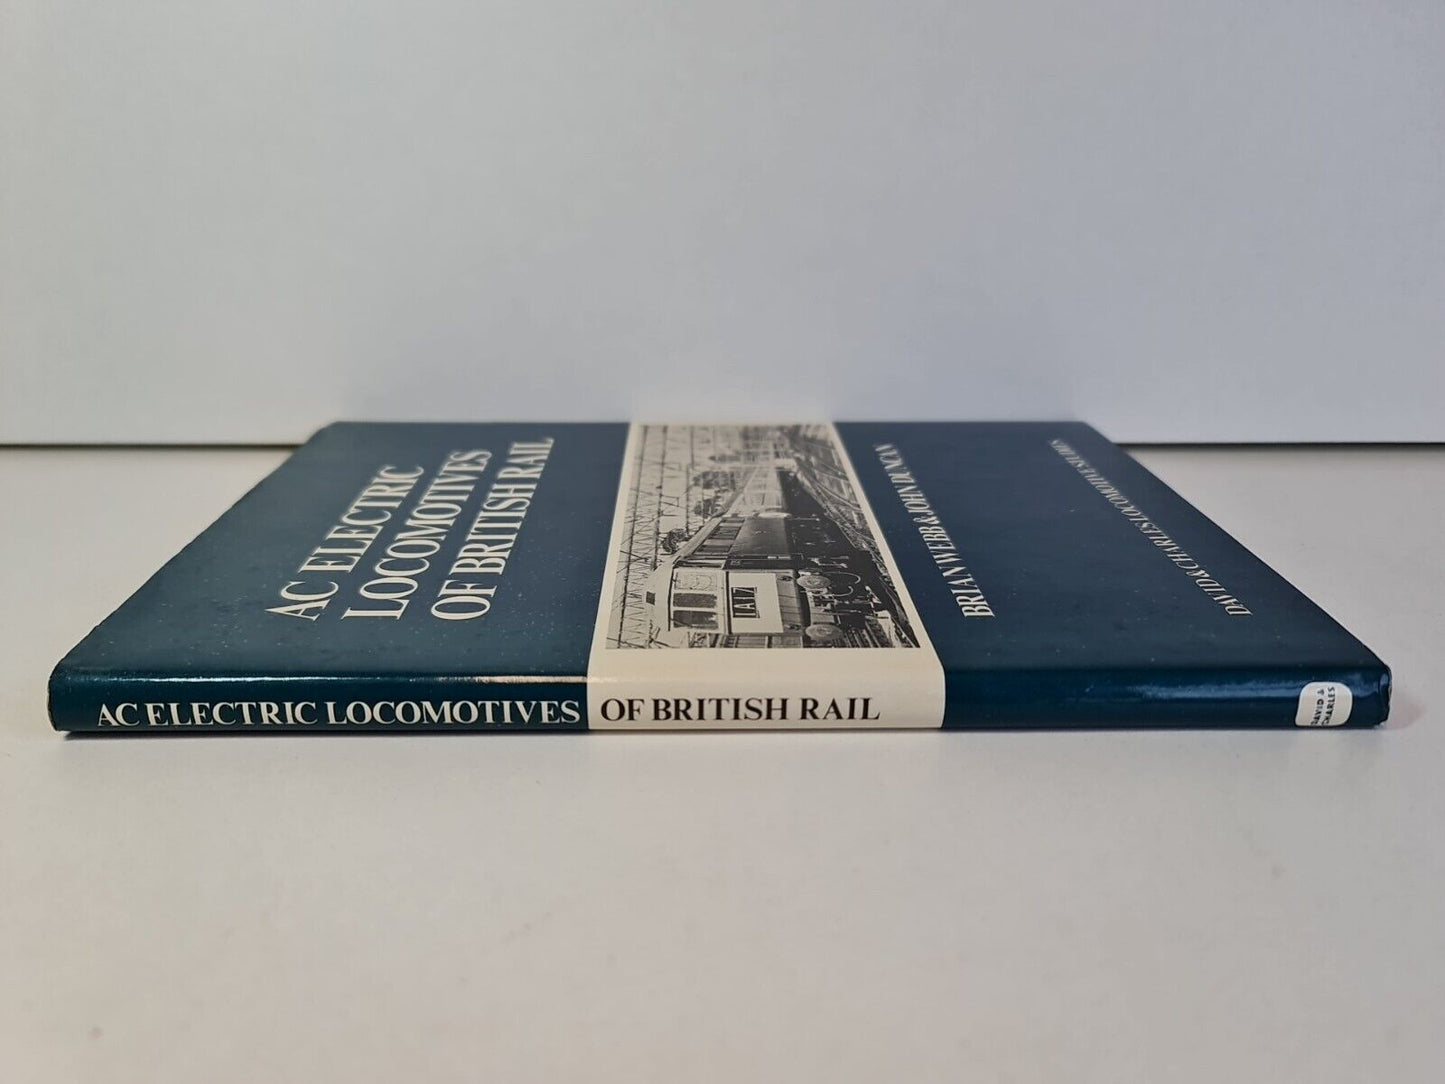 Alternating Current Electric Locomotives... by J. Duncan (1979)